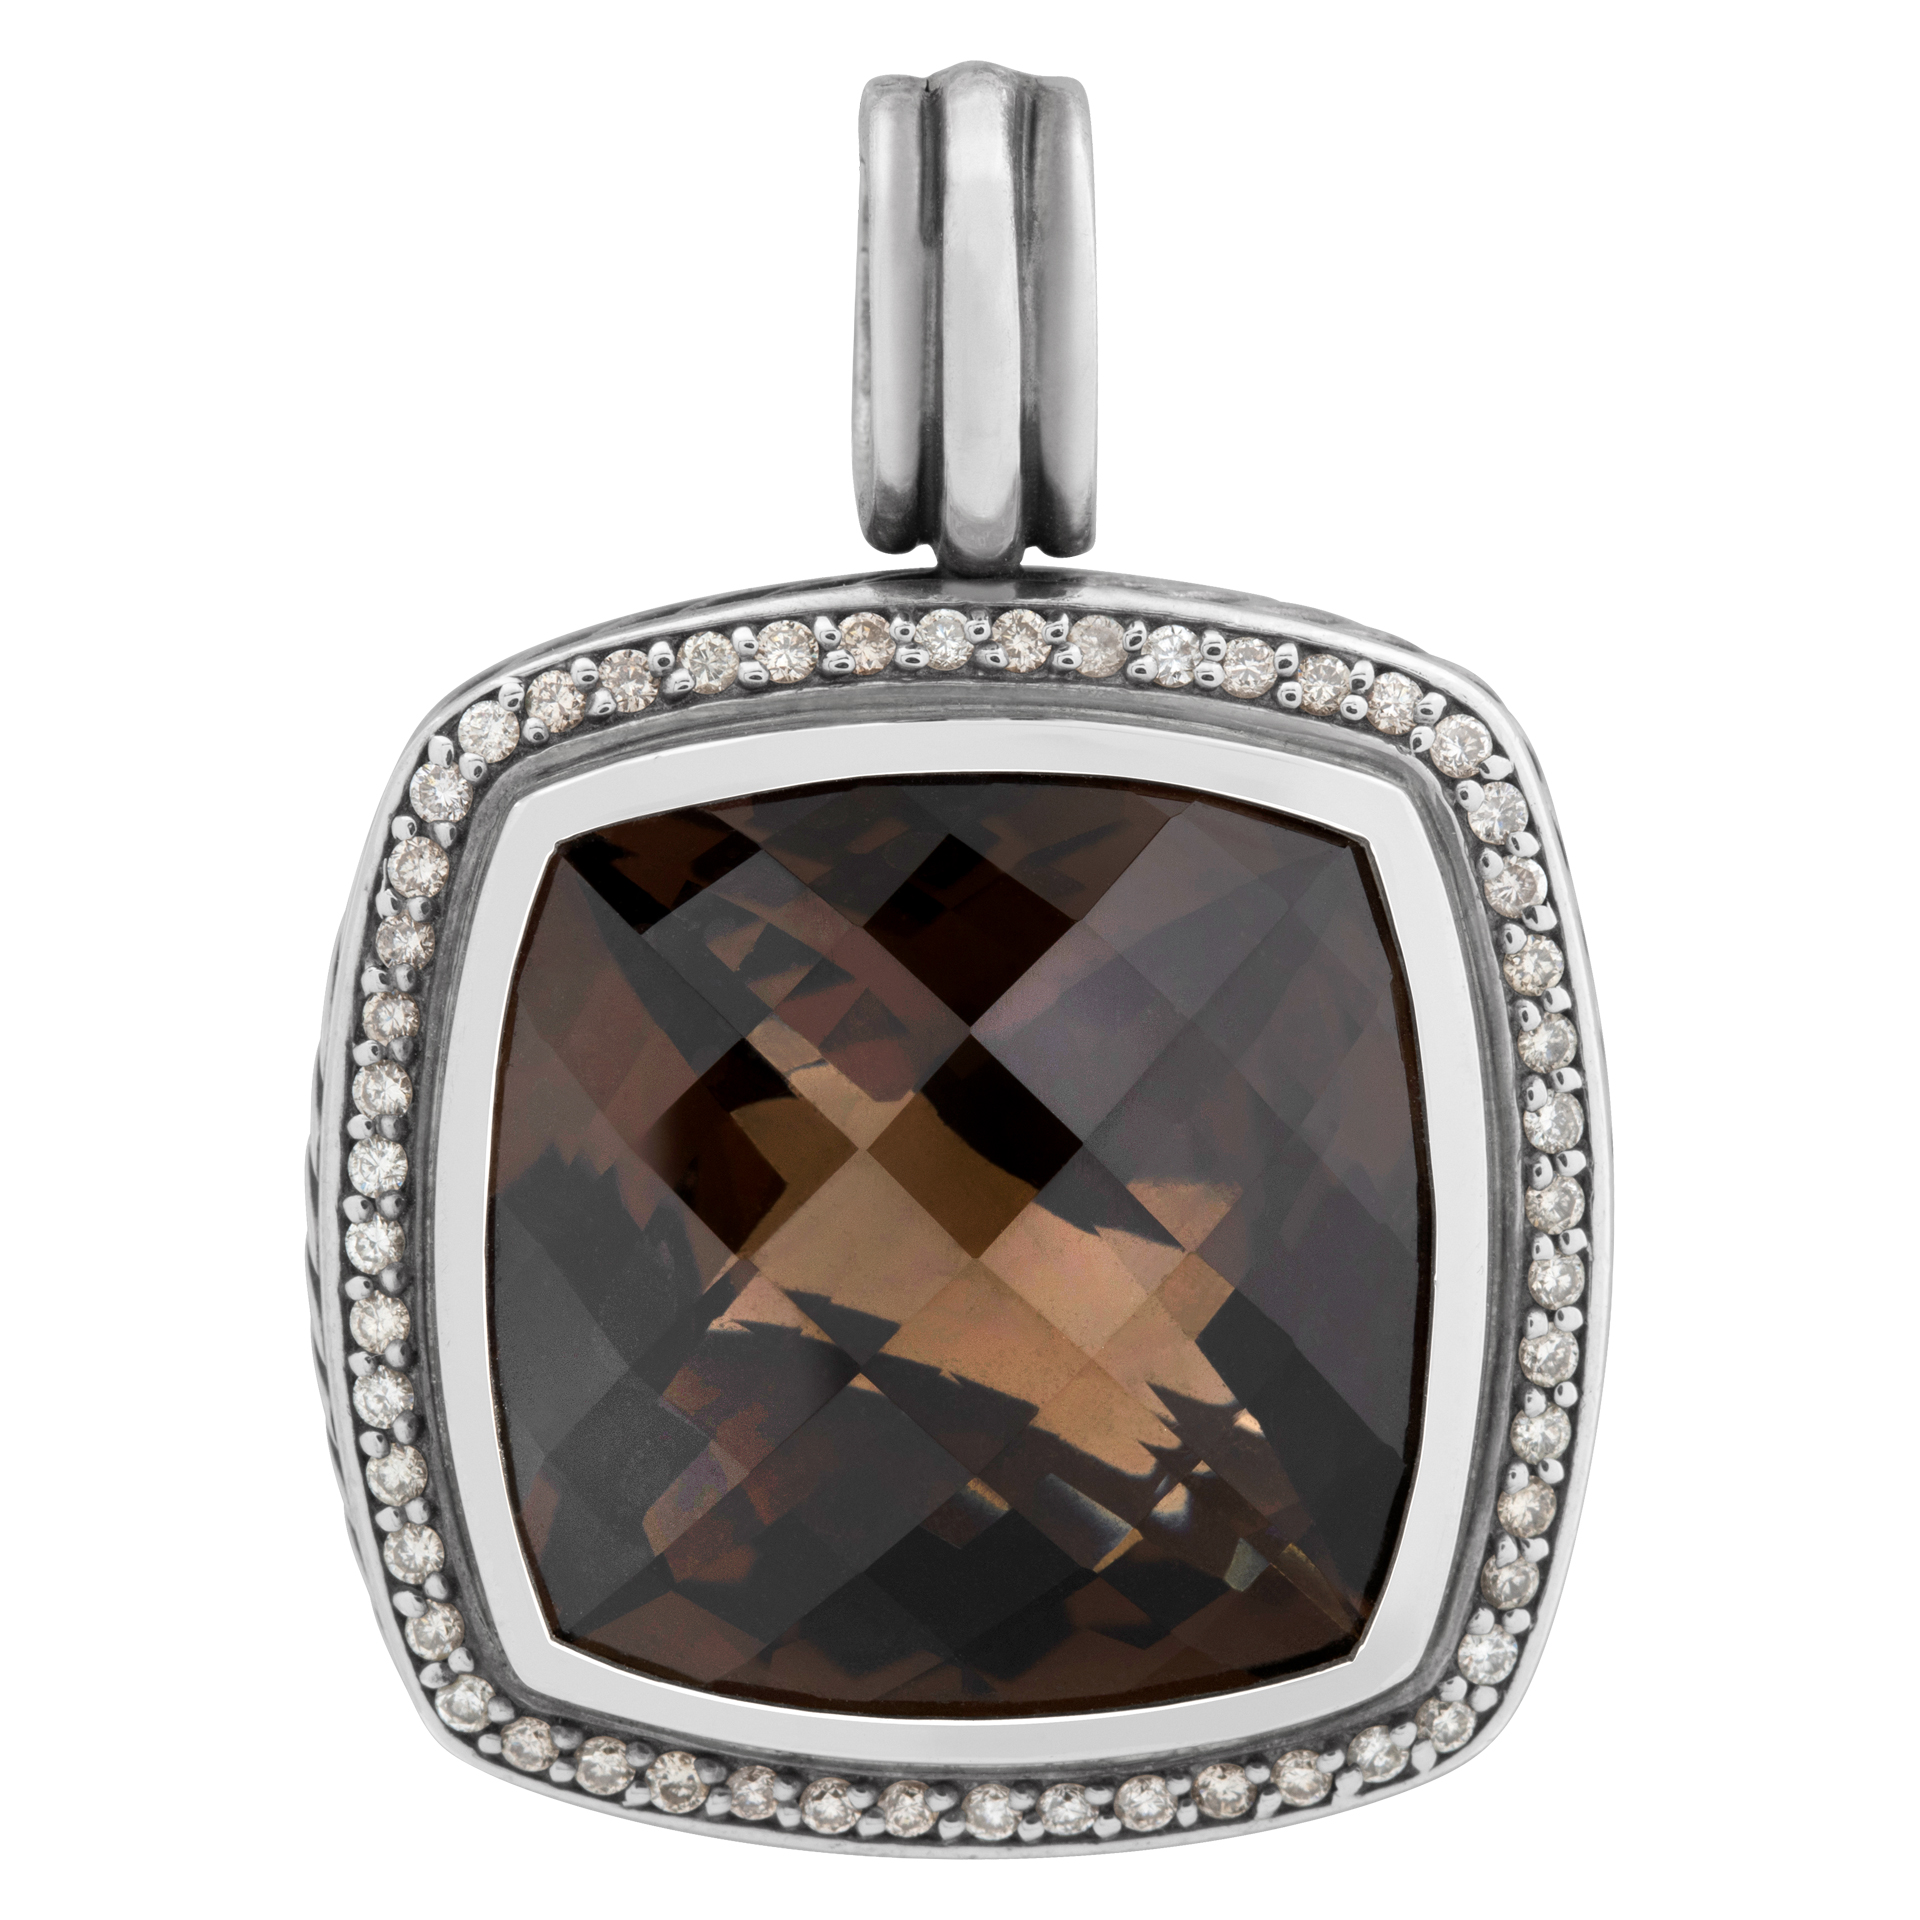 David Yurman Albion collection, smoky quartz & diamonds pendant, set in sterling silver